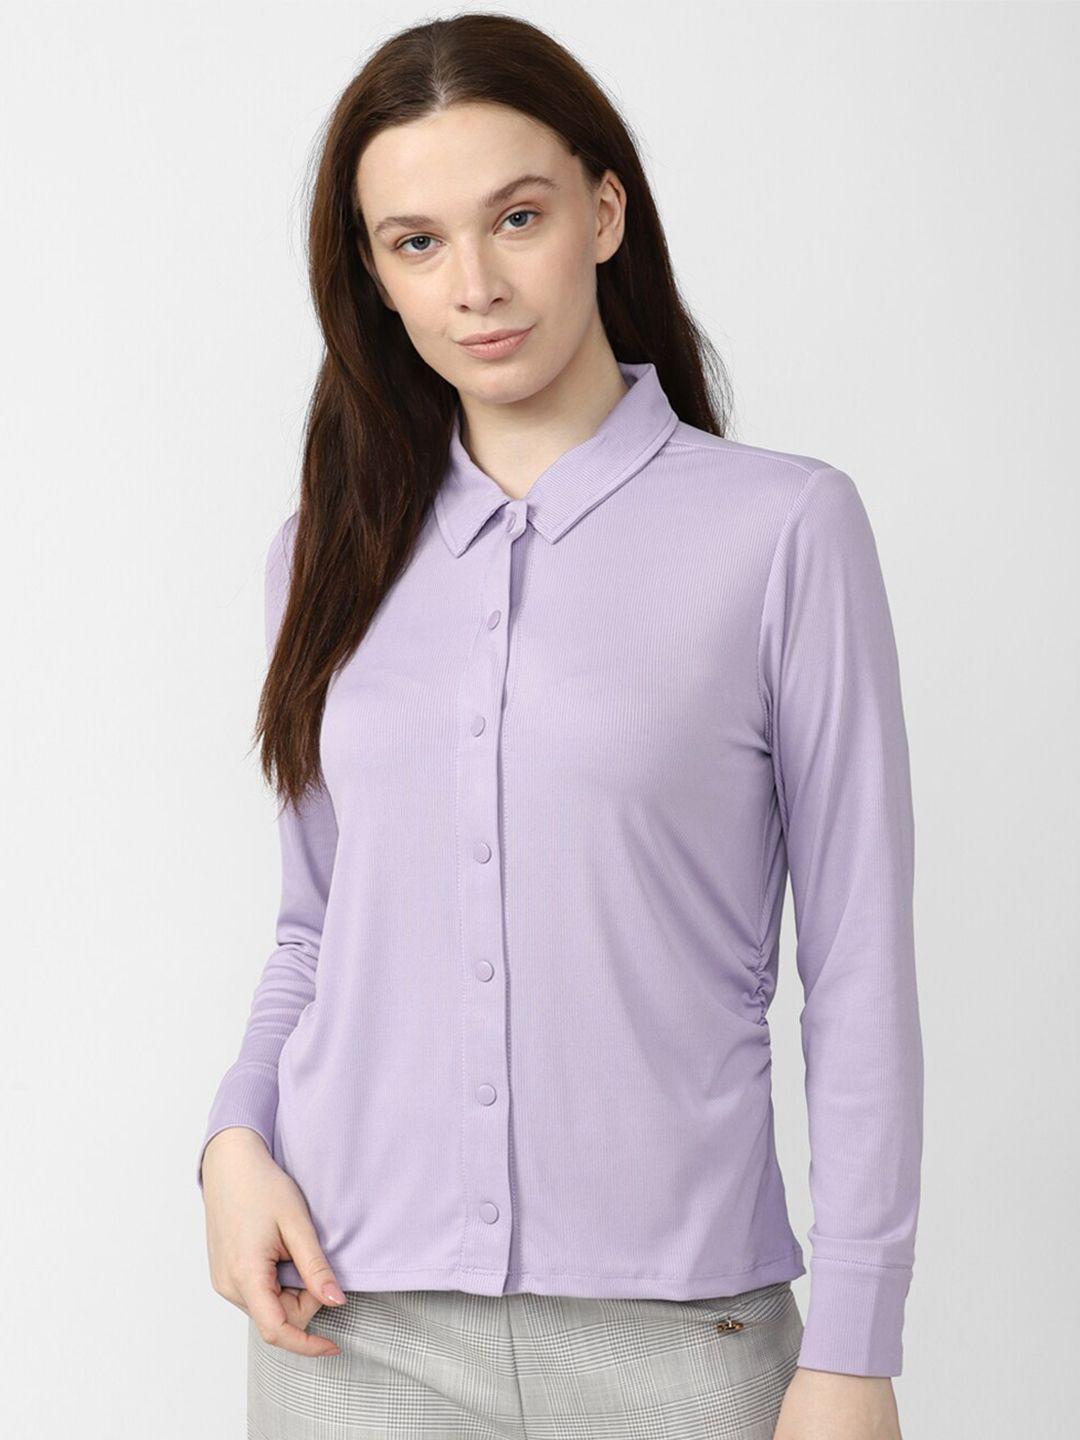 Van Heusen Woman Spread Collar Long Sleeves Casual Shirt